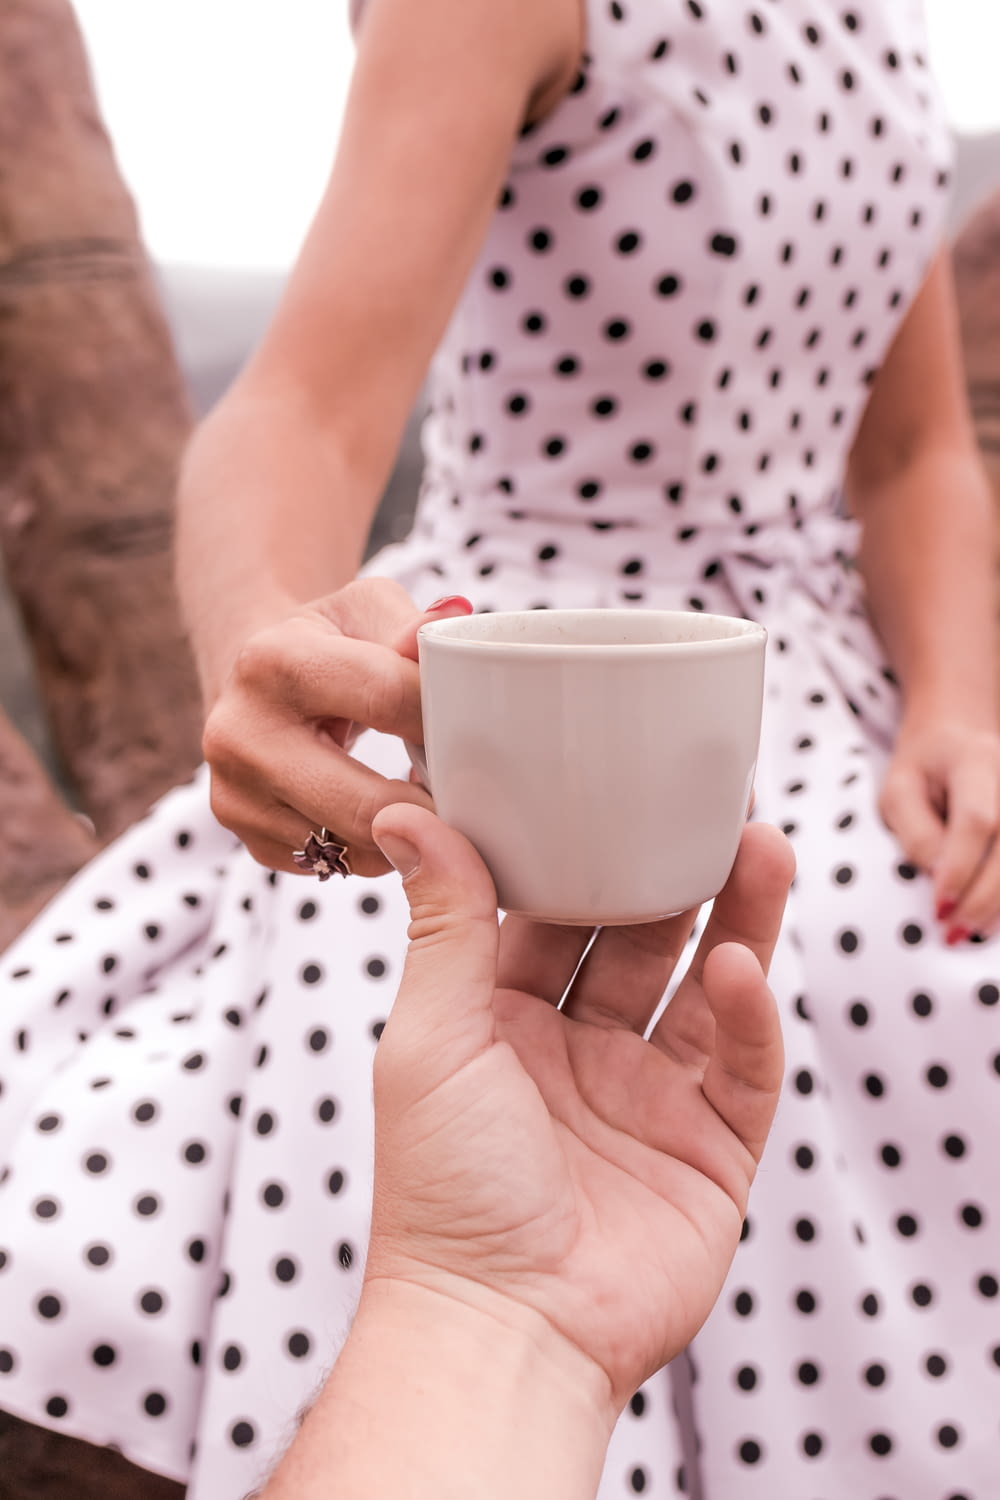 women;s white polka dot dress close-up photography